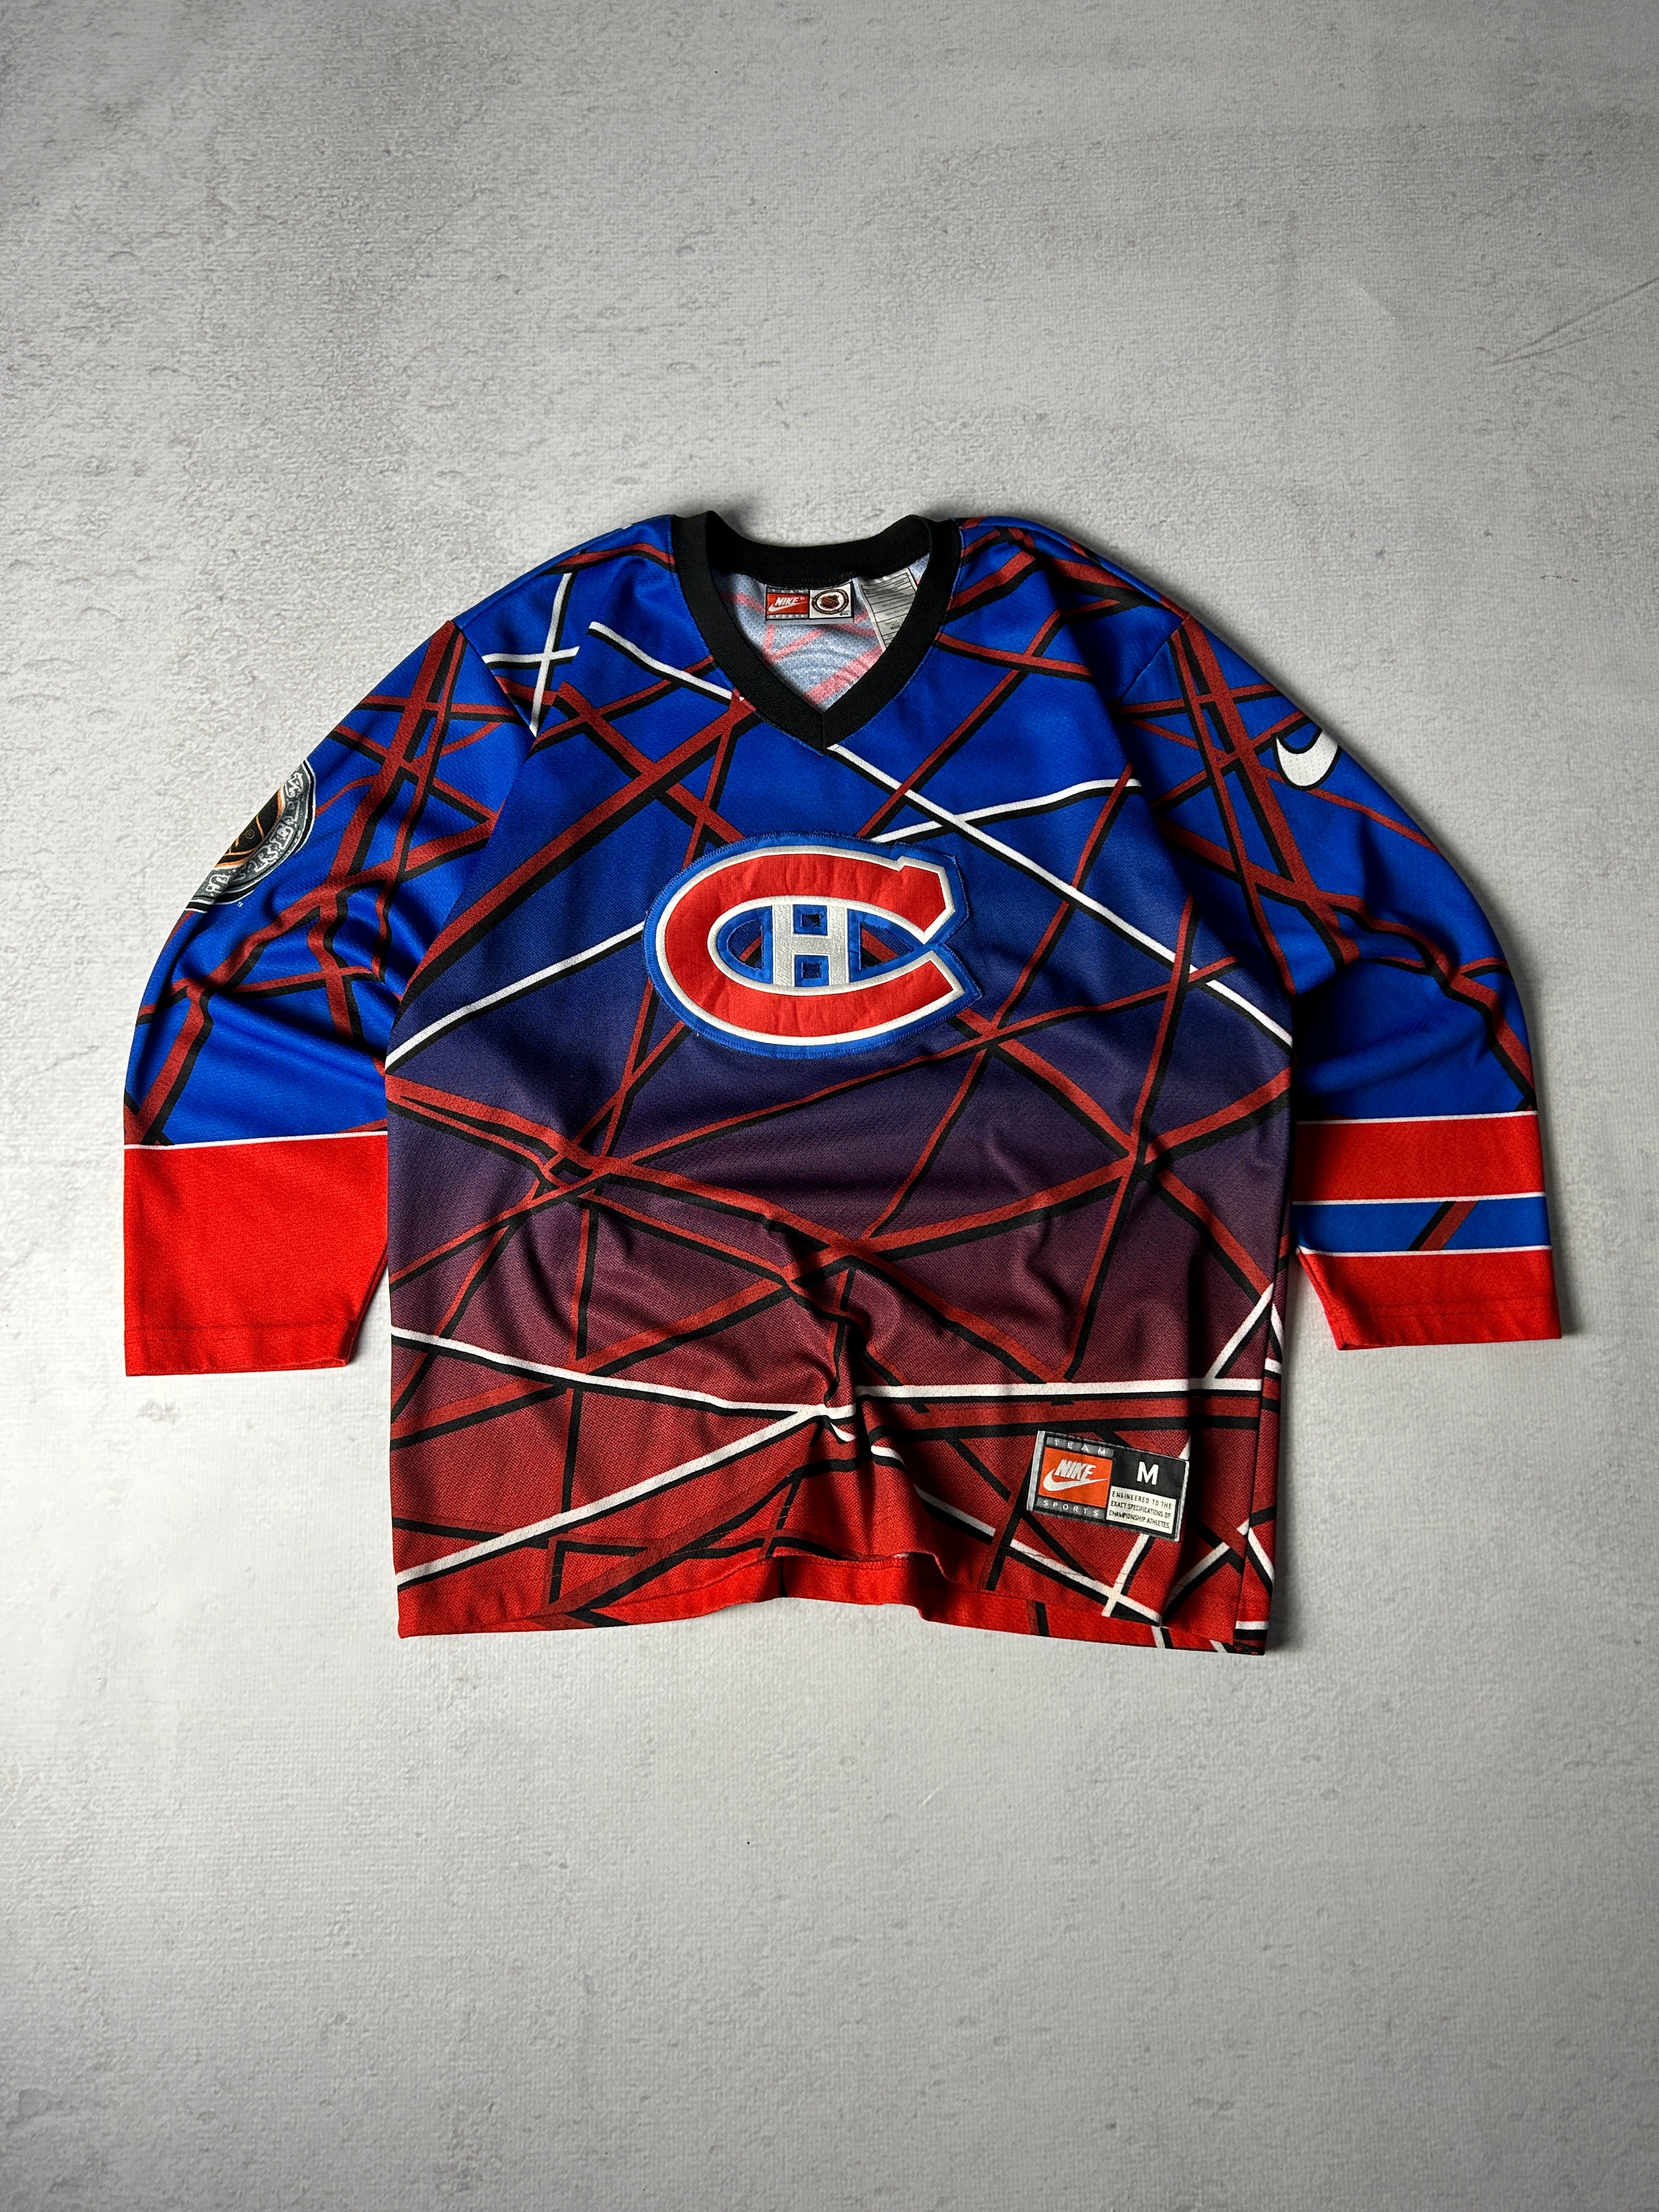 Vintage NHL Montreal Canadiens Jersey - Men's Medium